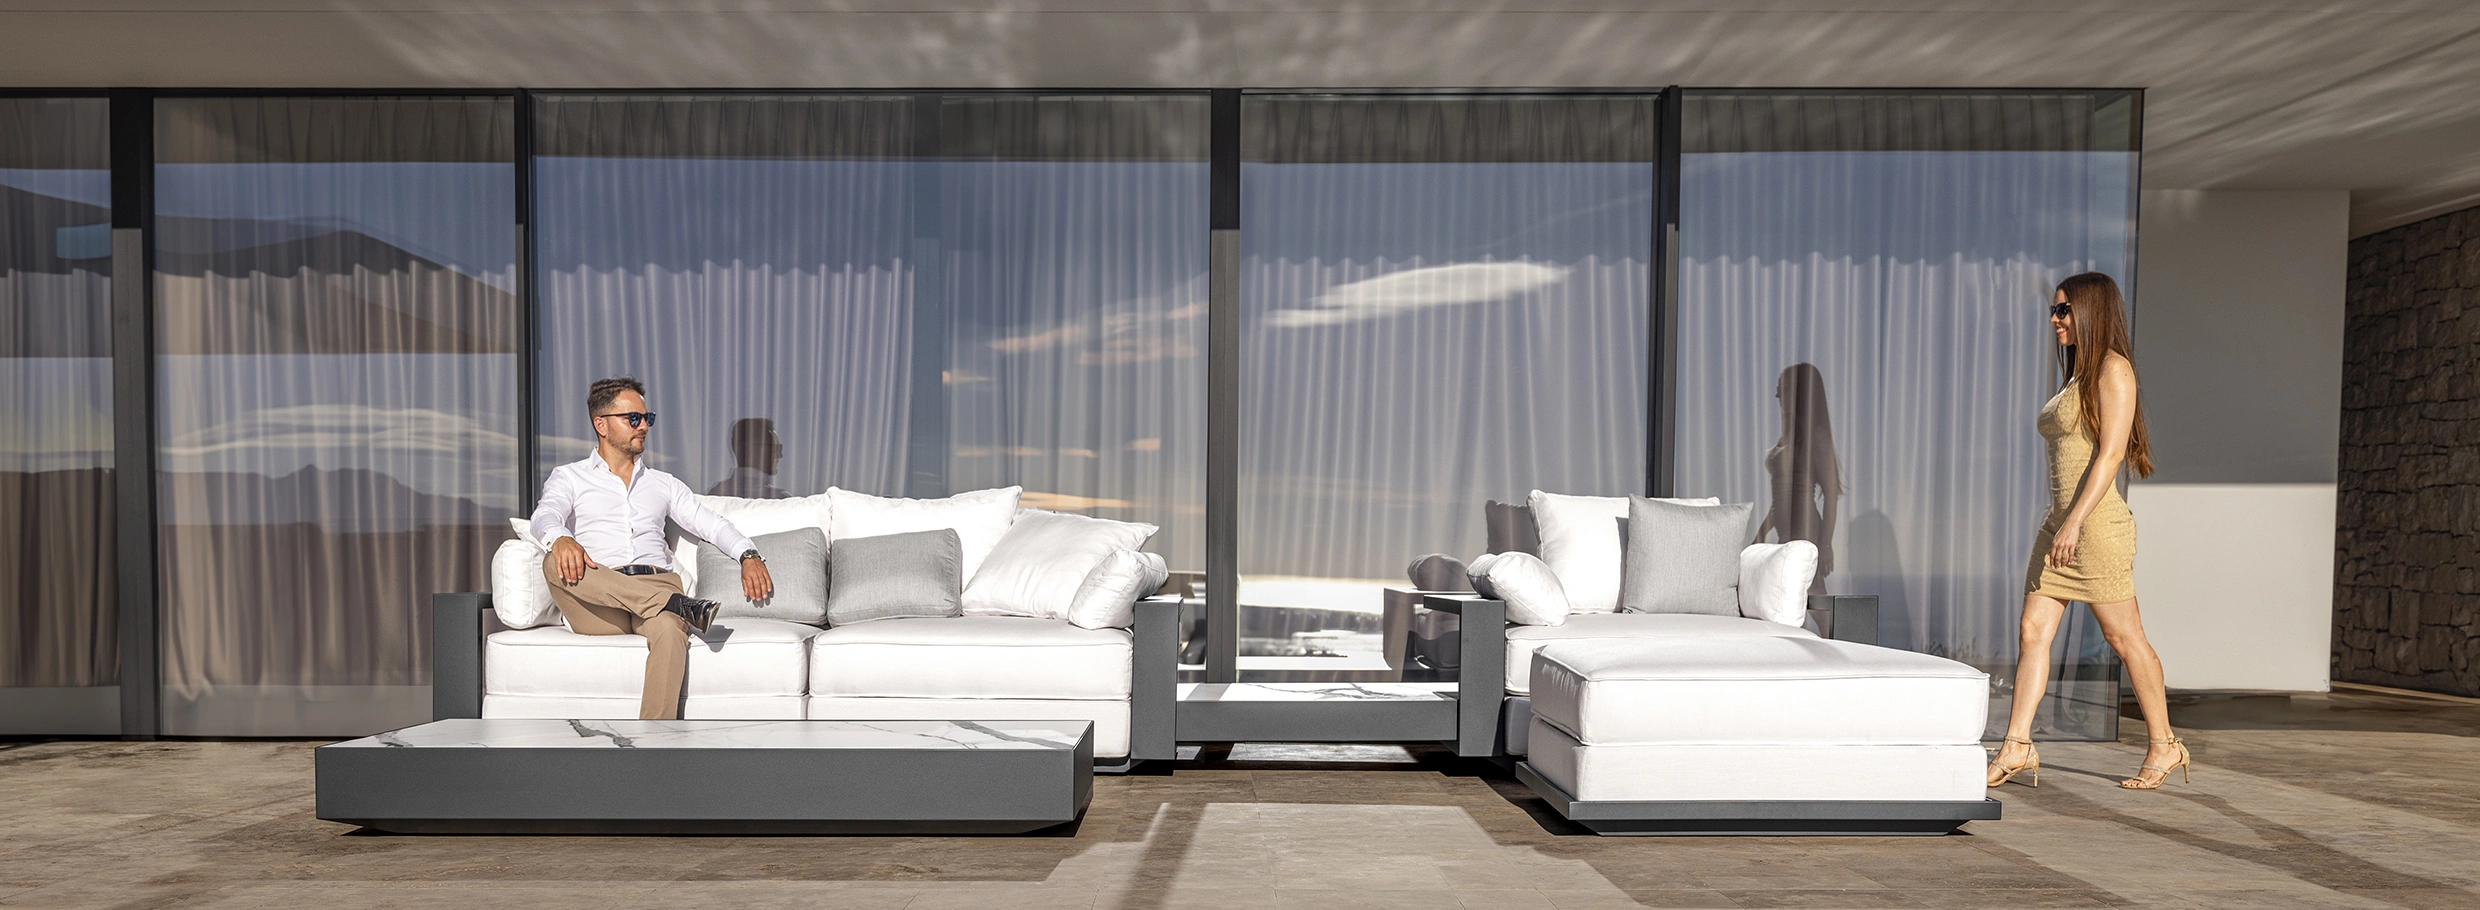 modern outdoor patio furniture